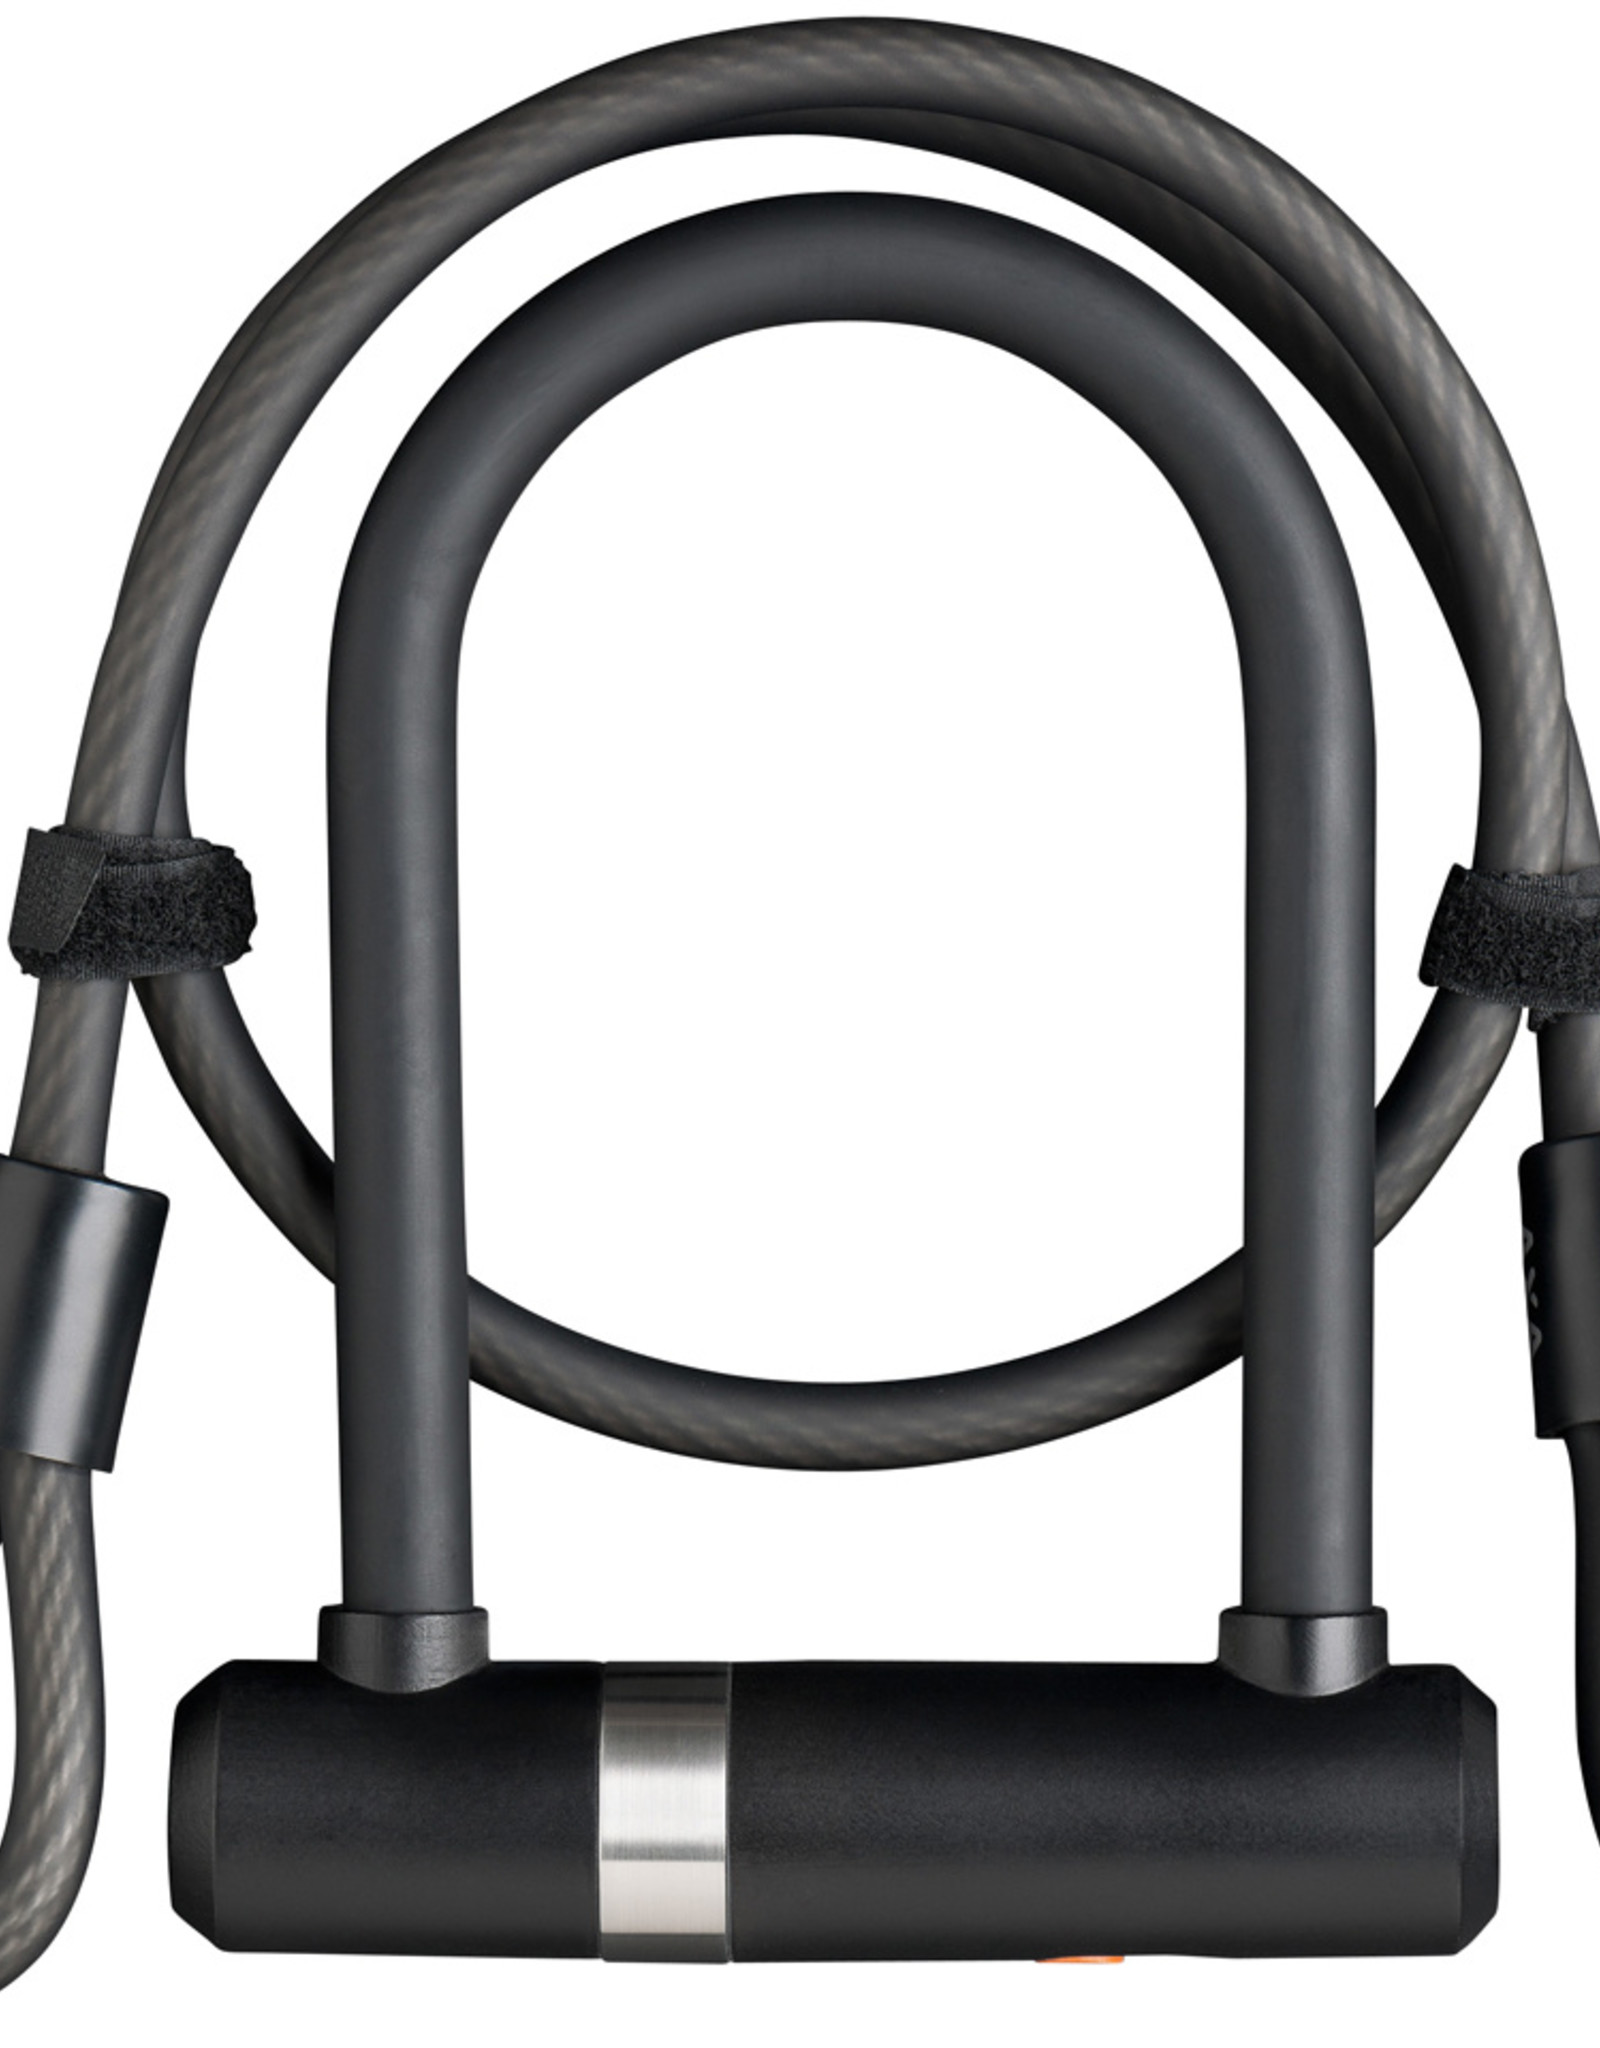 Bell Catalyst 550 U-Lock Black 7122018 Best Buy, 53% OFF